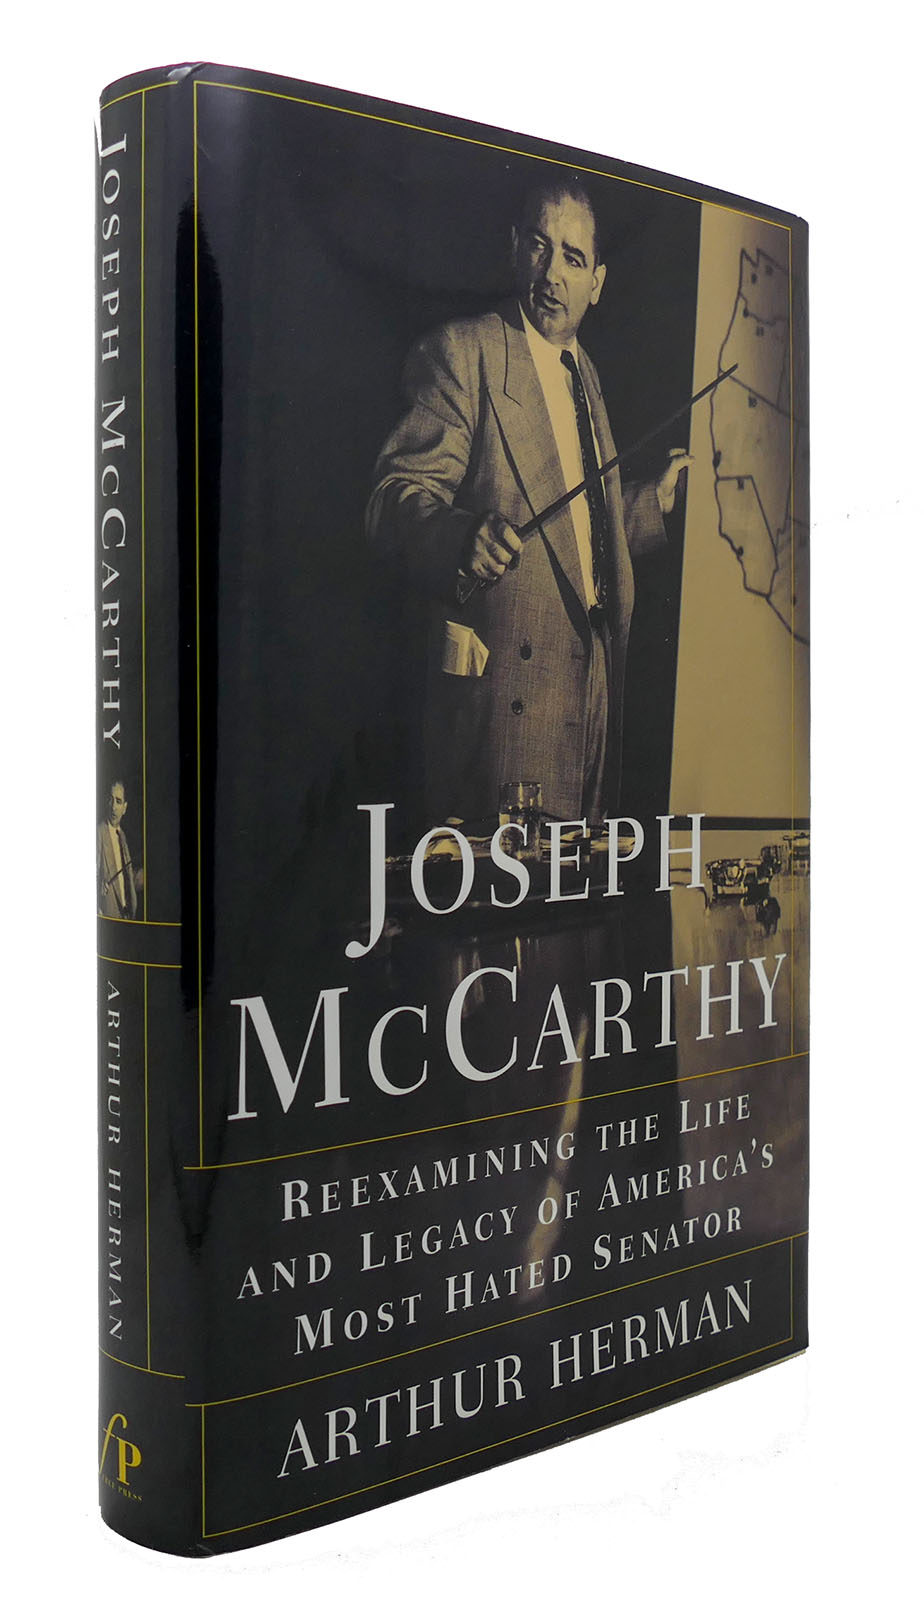 JOSEPH MCCARTHY Reexamining the Life and Legacy of America's Most Hated Senator - Arthur Herman